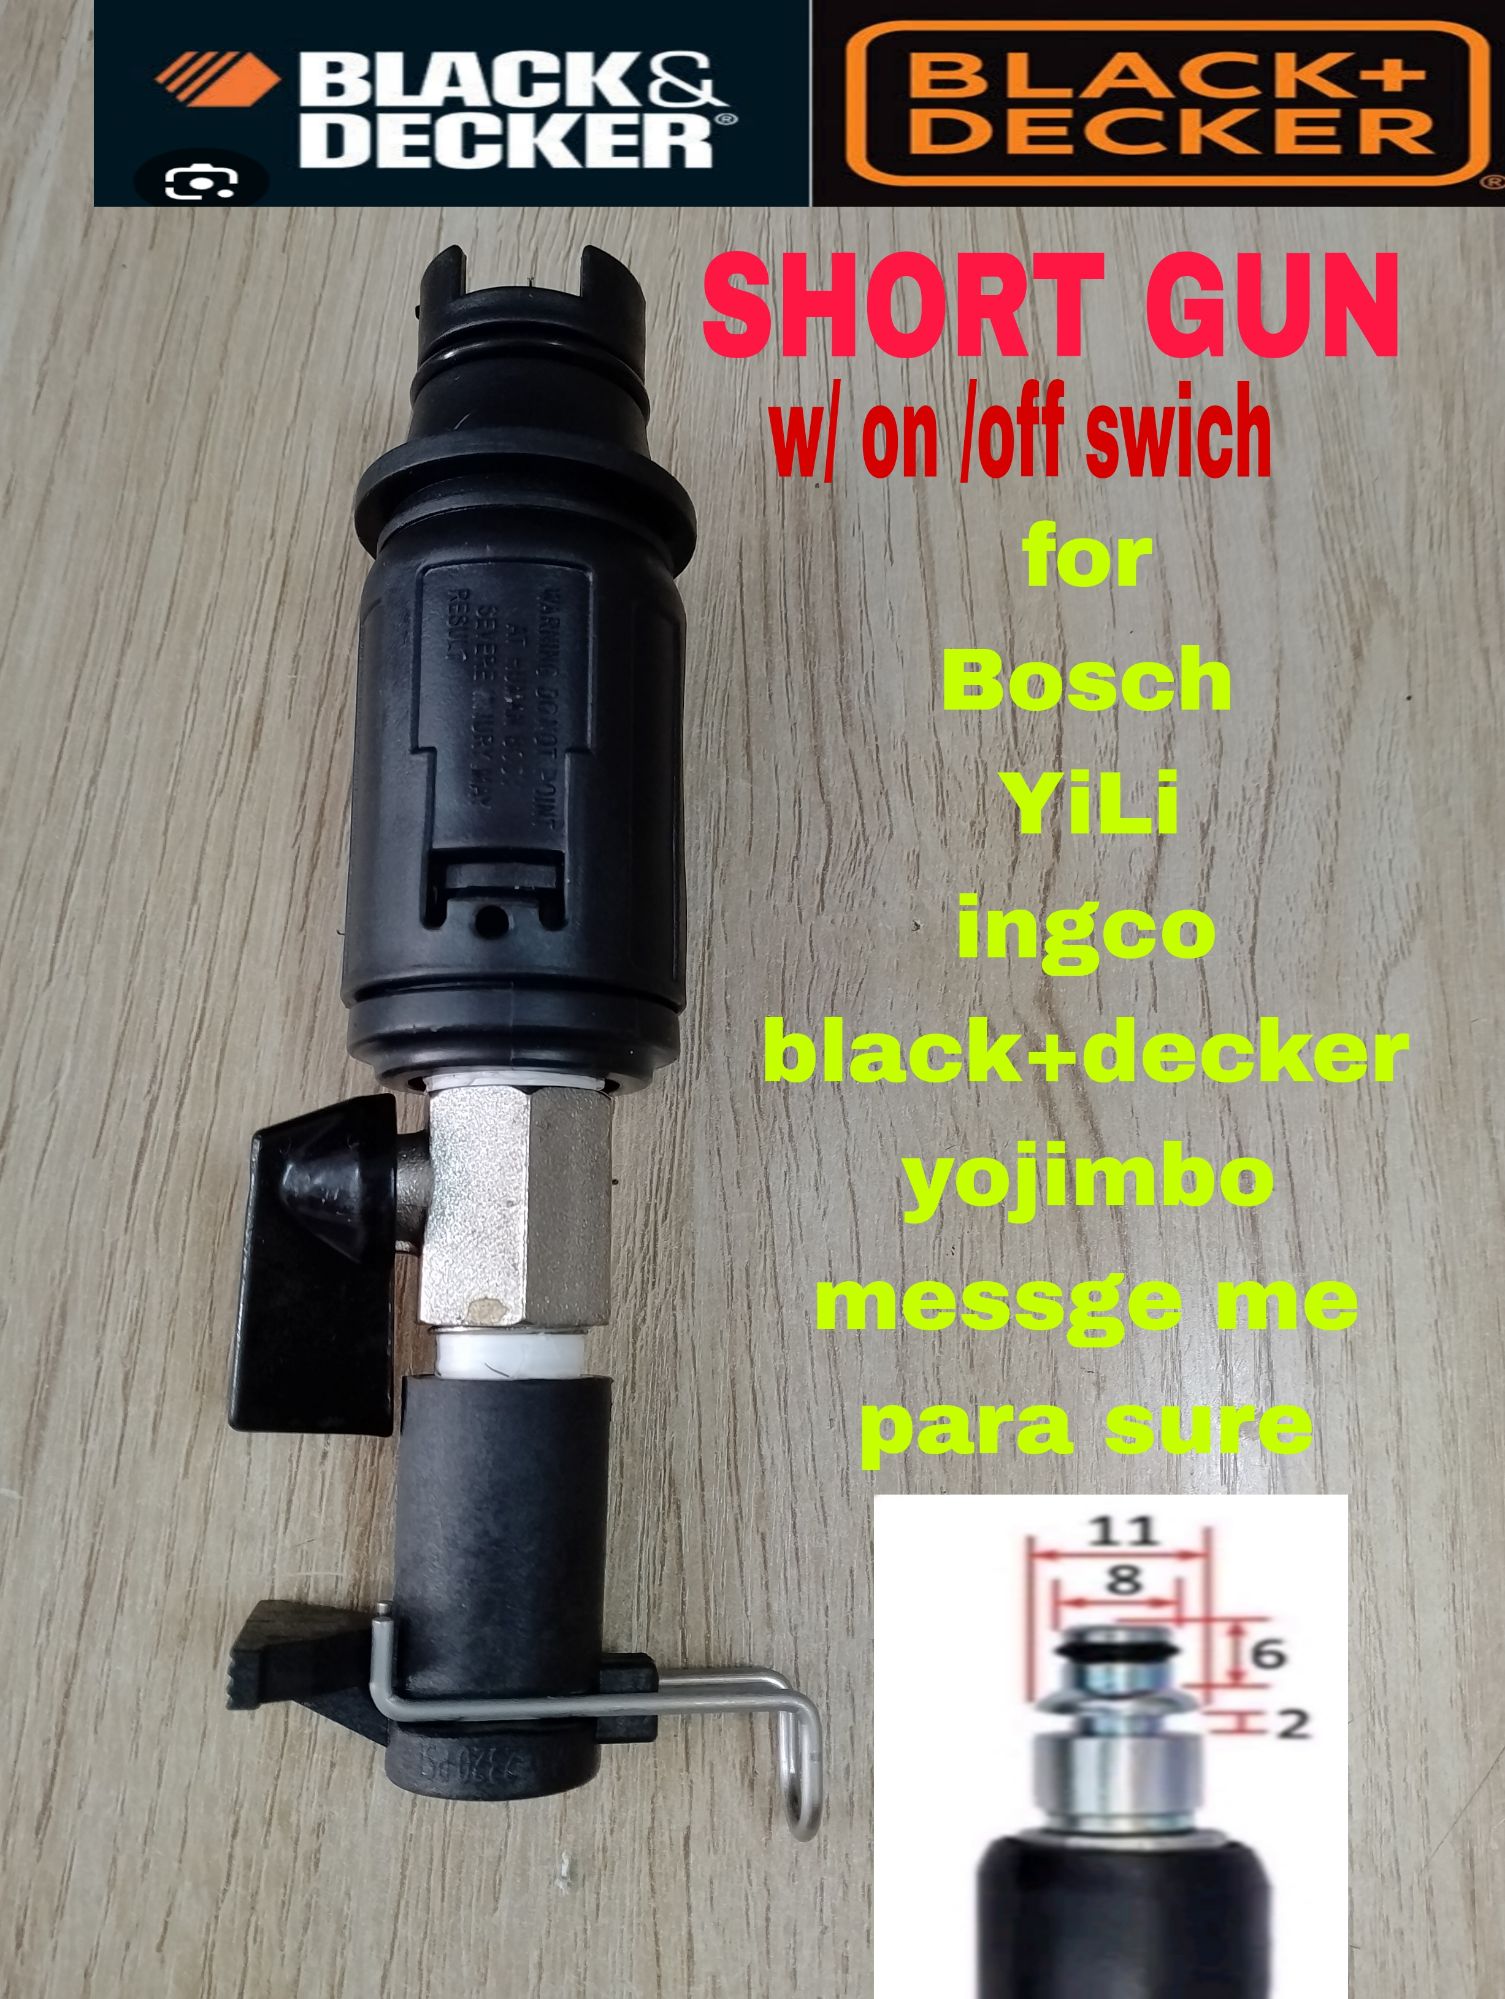 Black+decker Hot Glue Gun Kit, White (BDHT70001)